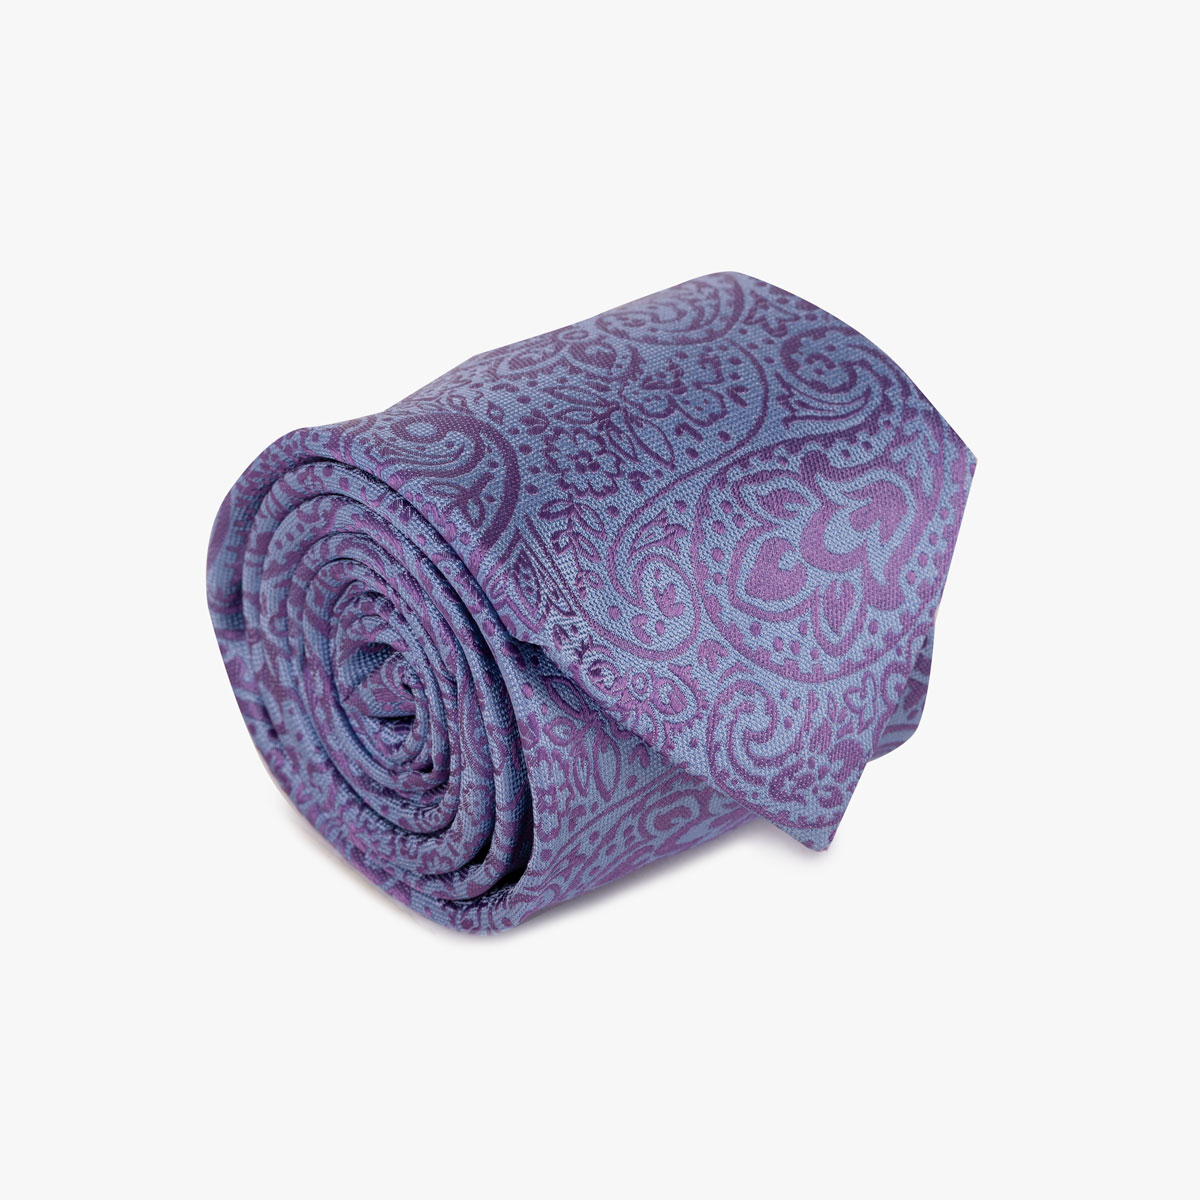 Krawatte mit Paisley in lila blau